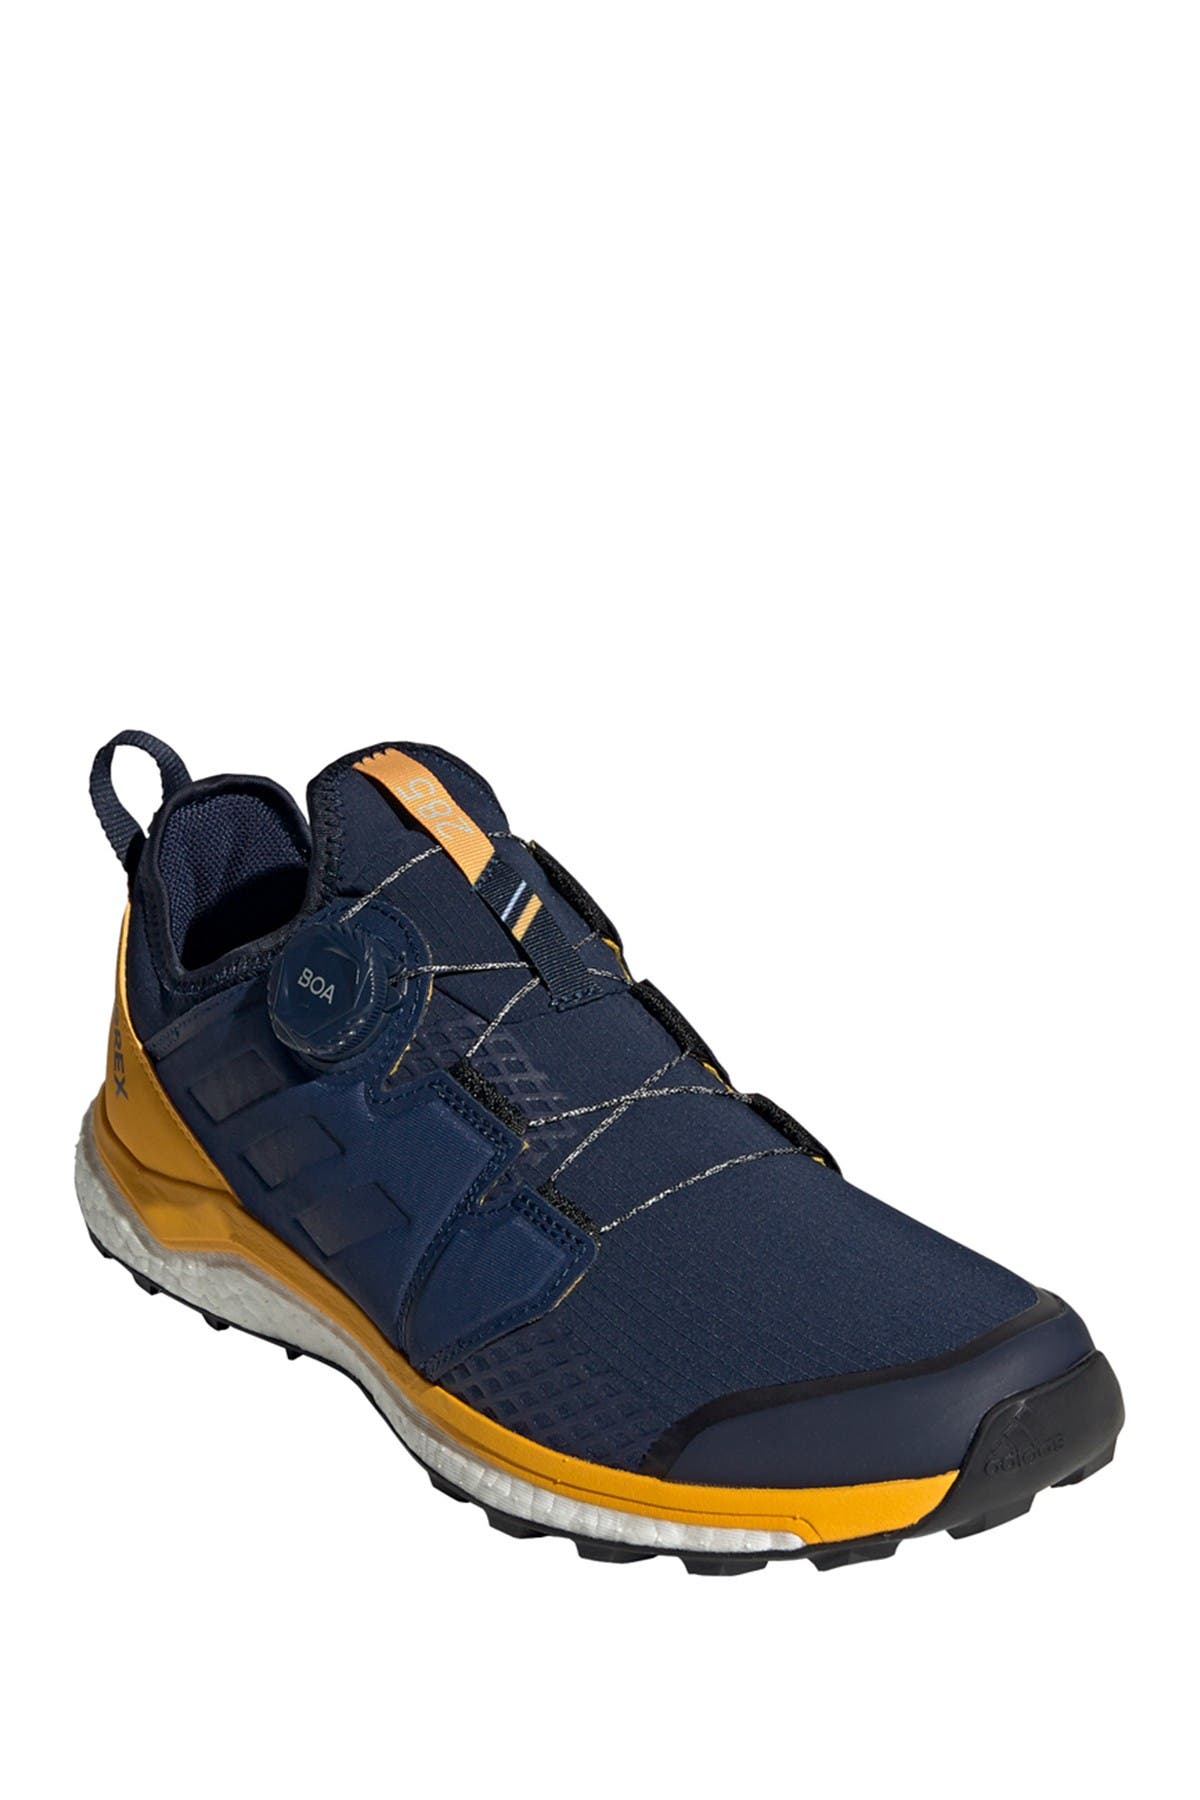 boa trail shoes